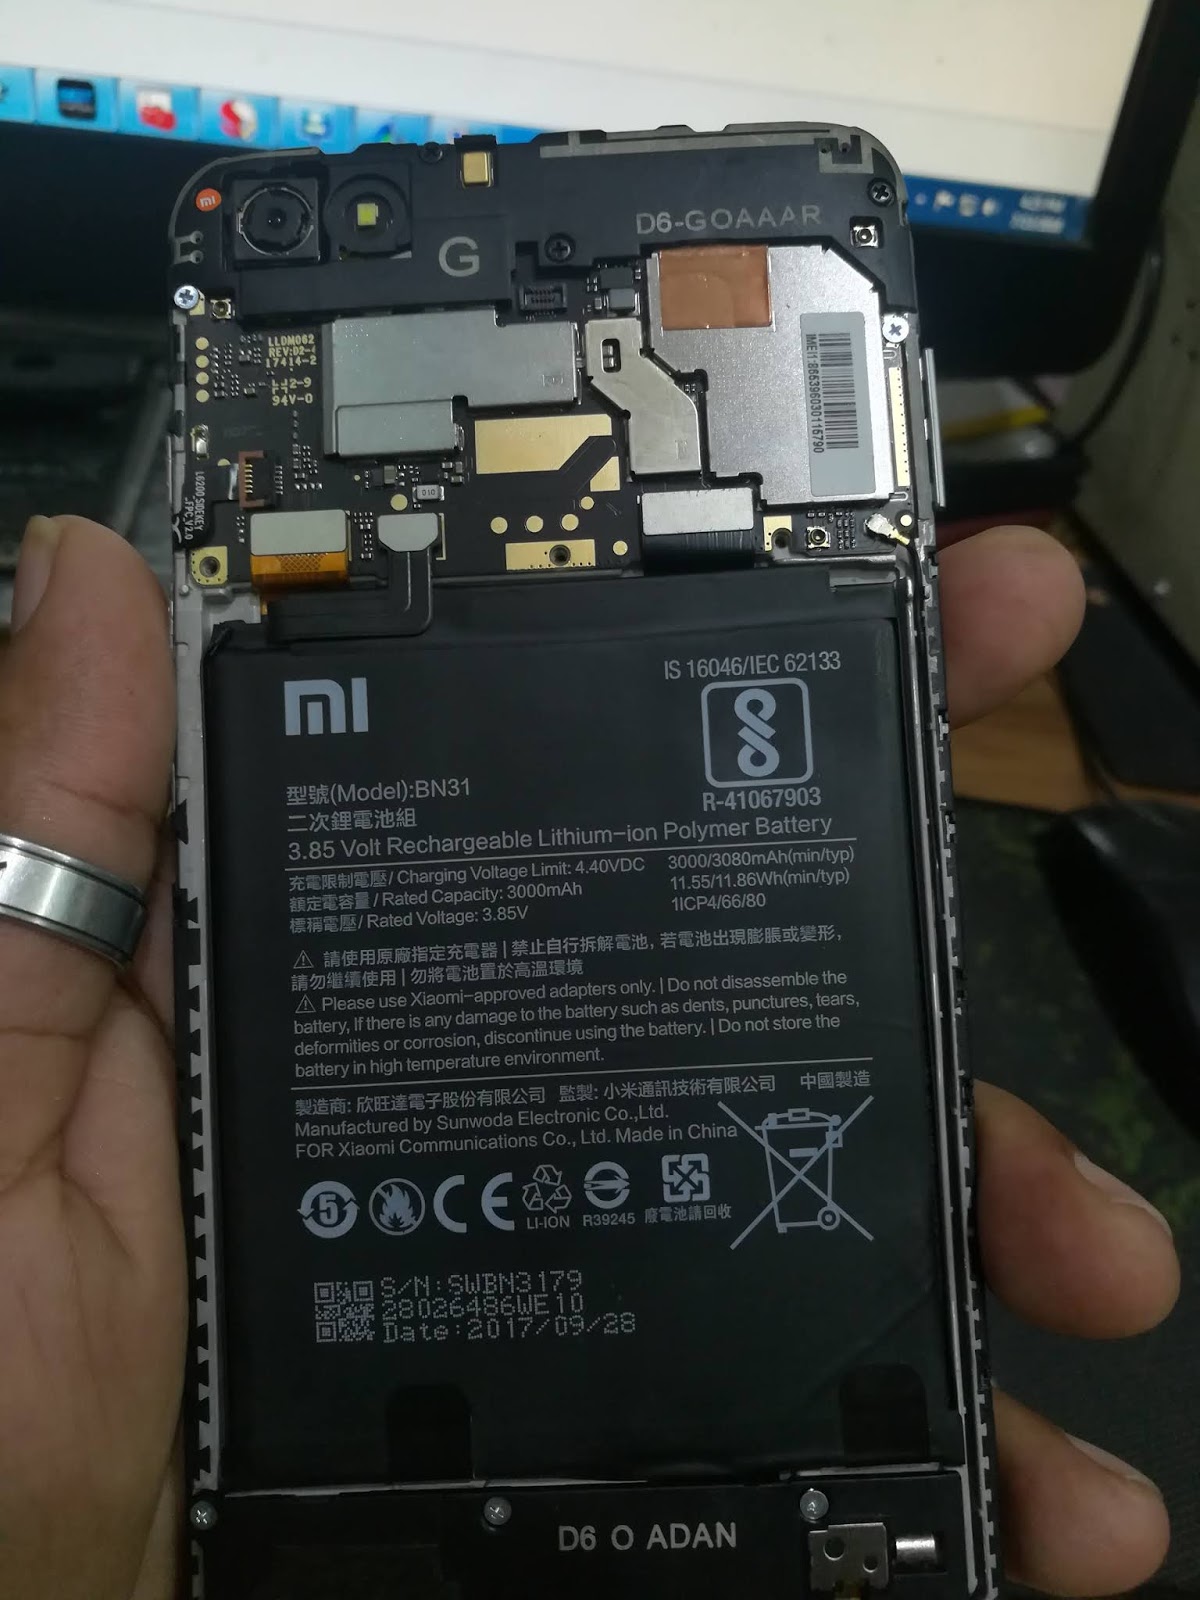 Redmi Note 5 Firmware